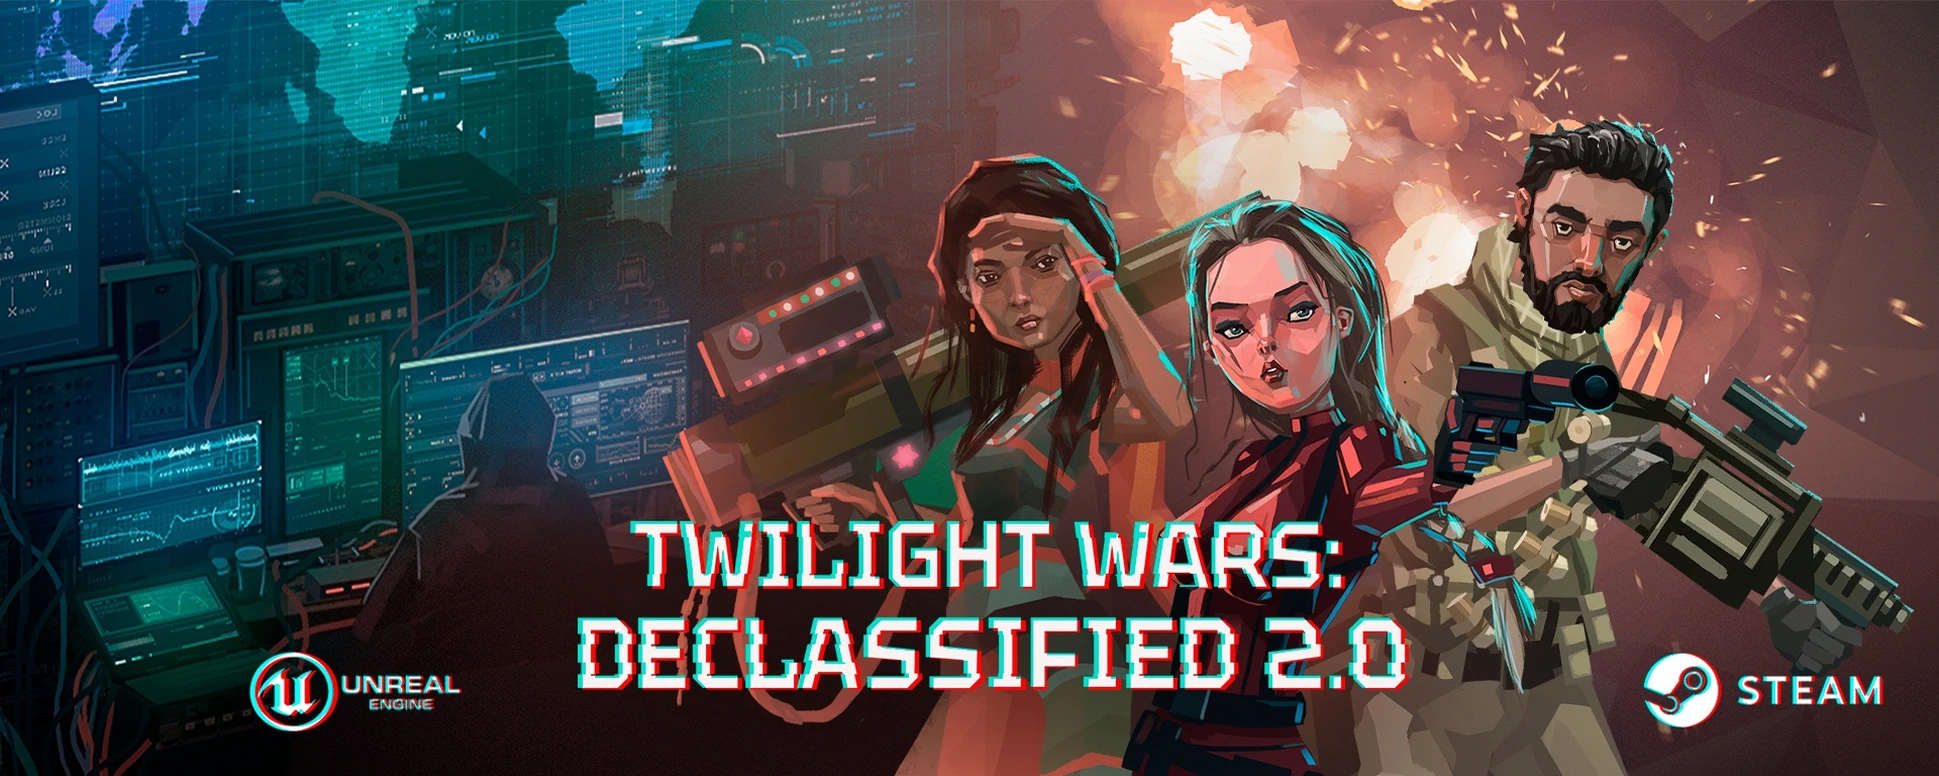 Twilight Wars — Darkest Dungeon в оболочке киберпанка